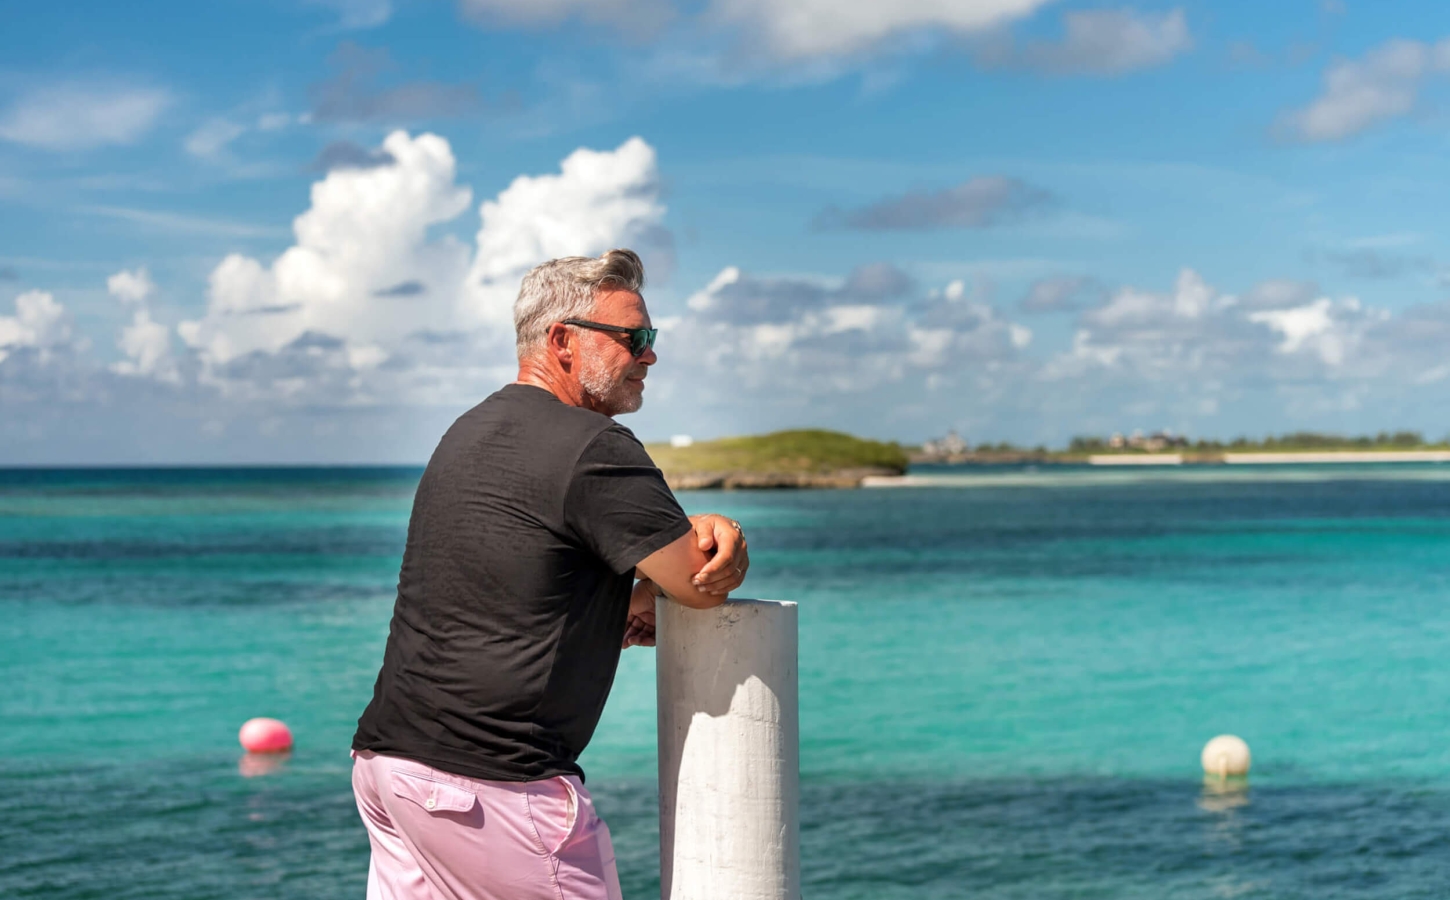 Golfer Abaco Club ambassador Darren Clarke looking at the Bahamian sea